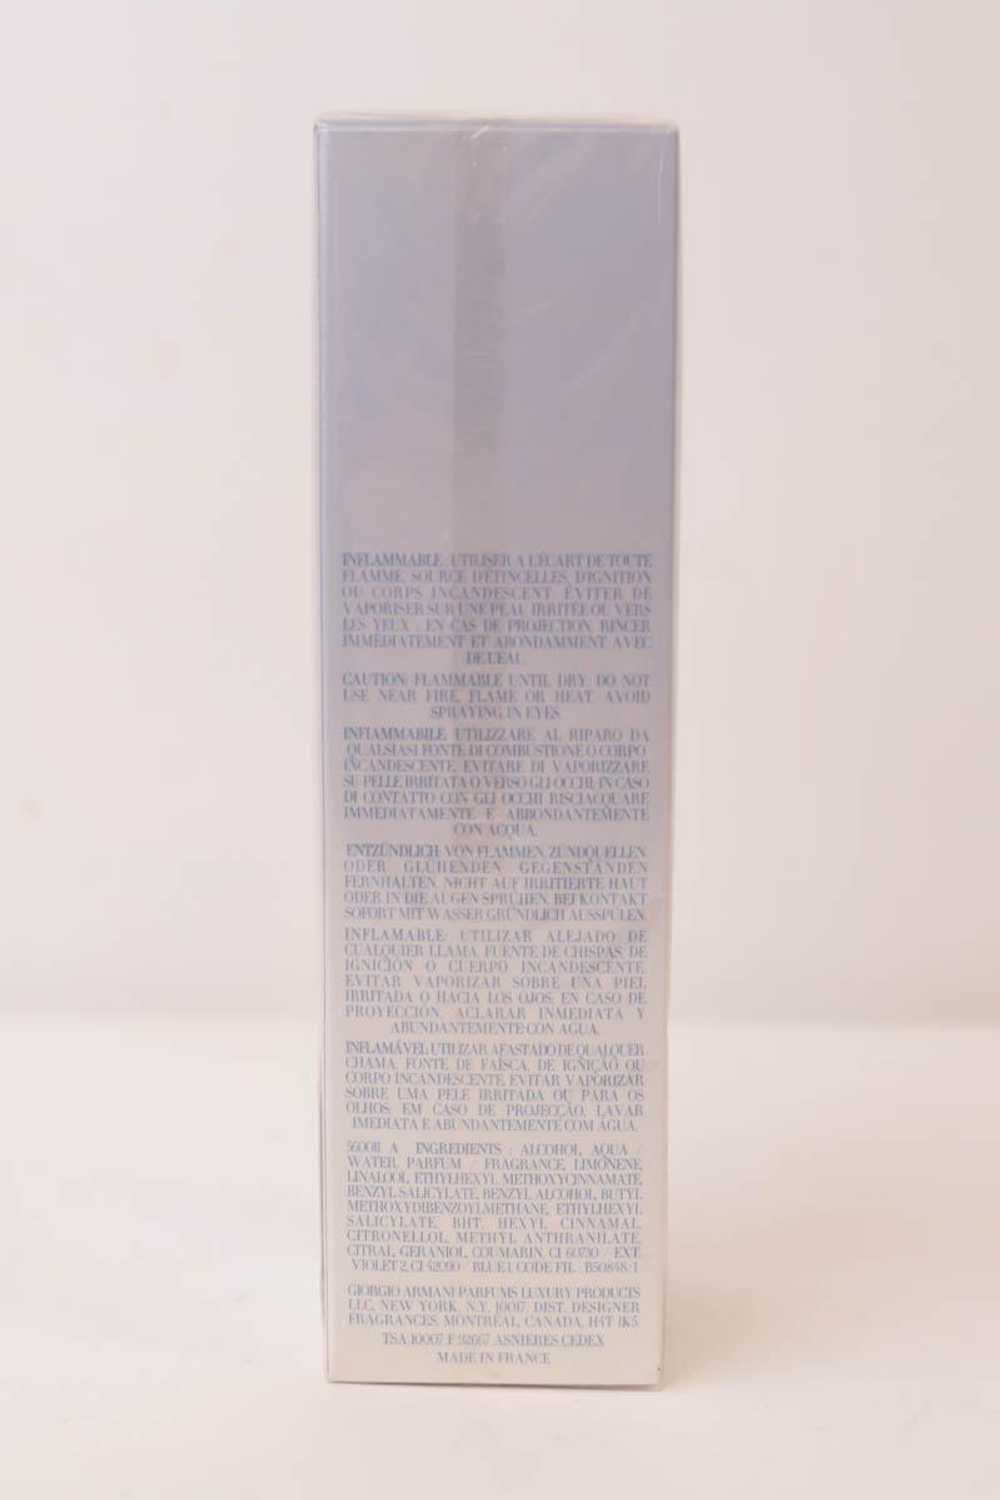 Circular Clothing Parfum Armani gris. 75ml. - image 3